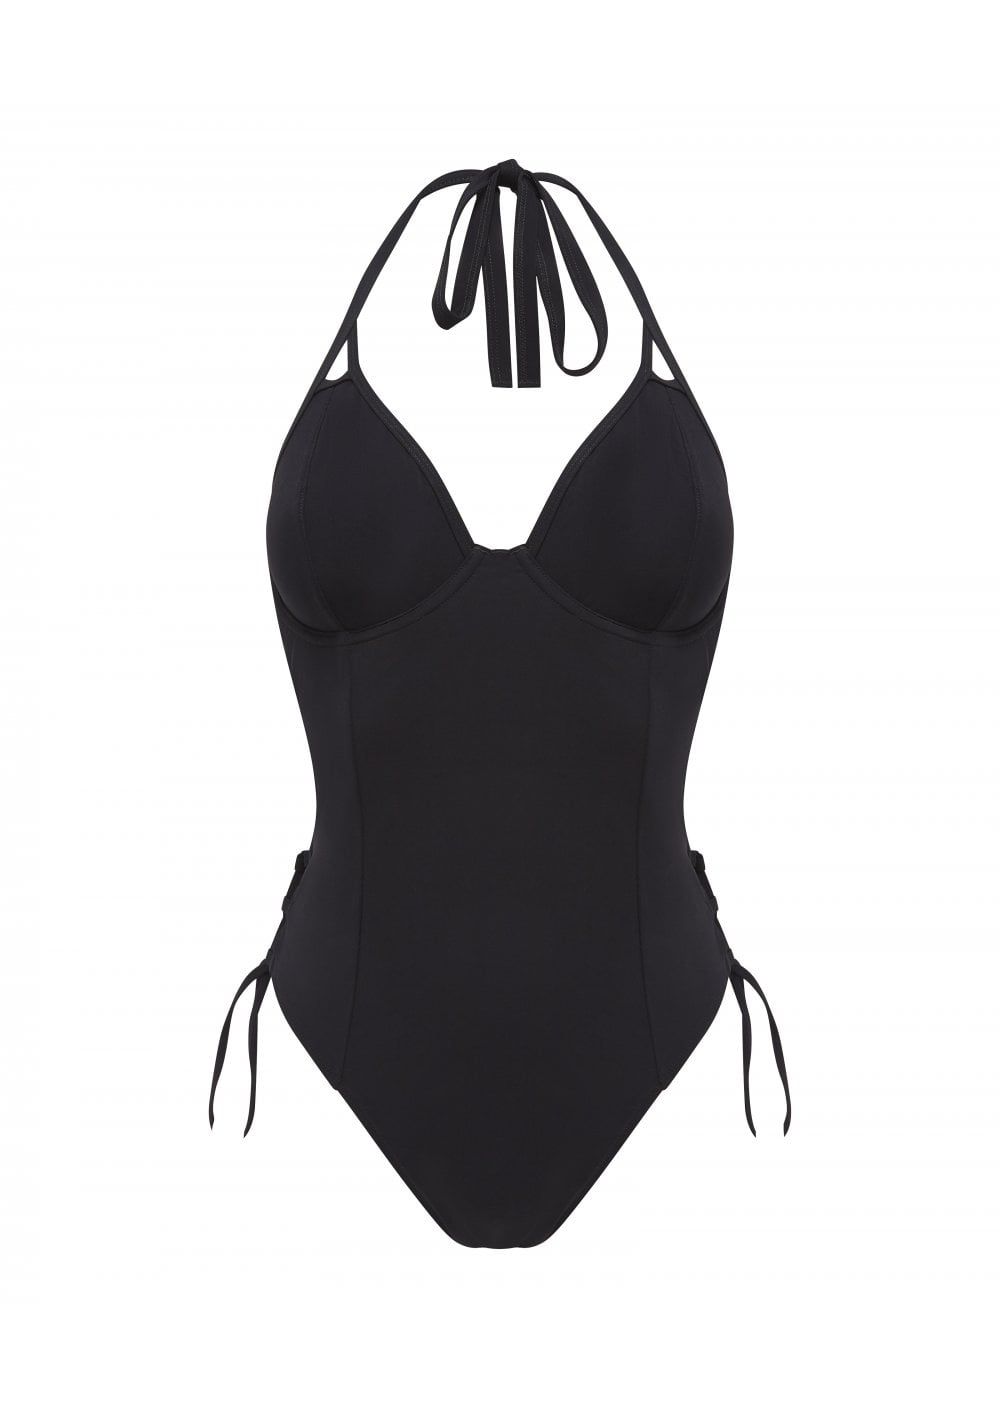 Miss Mandalay Swimwear - Icon full Bust Halter Swimsuit DD - GG Cup Sizes